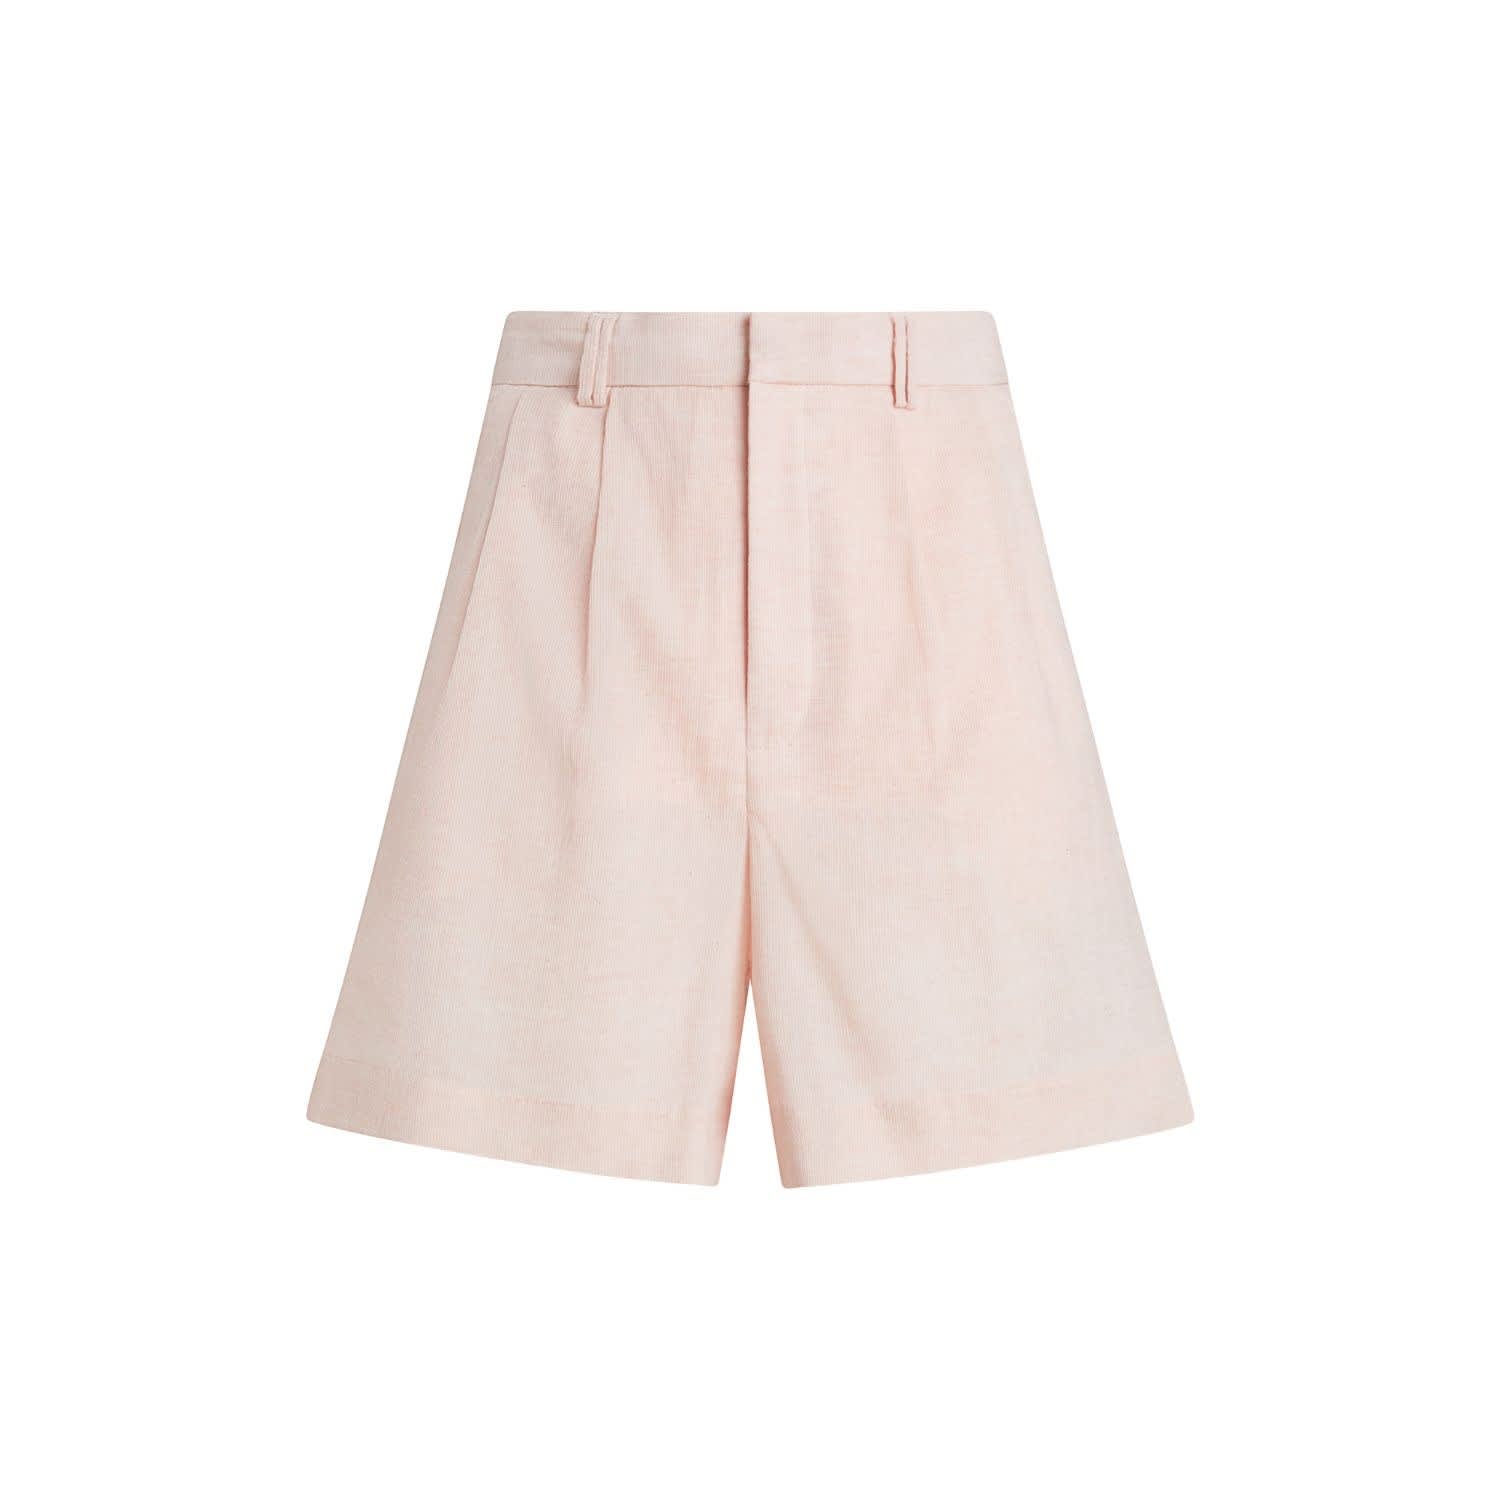 Urban Chic Pink Tailored Shorts